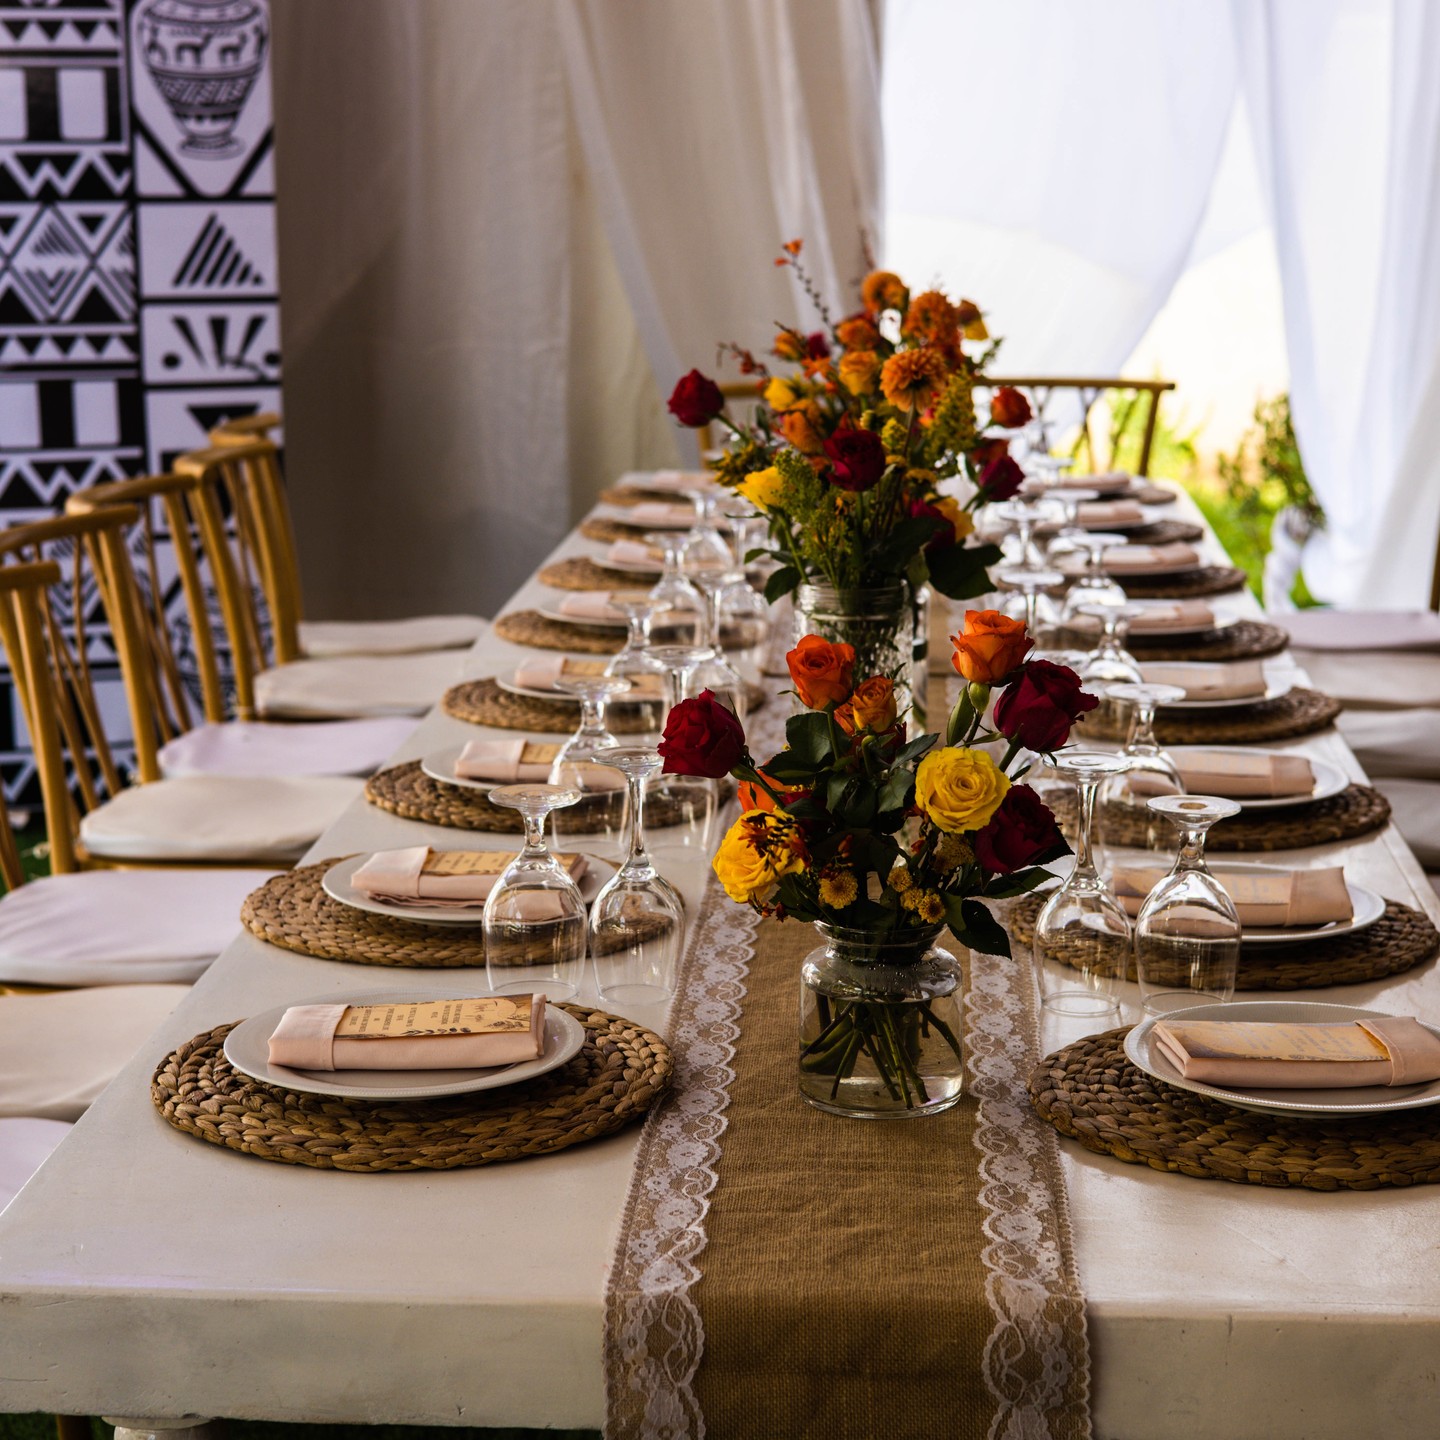 9 Amazing Wedding Venues to Consider in Kololo